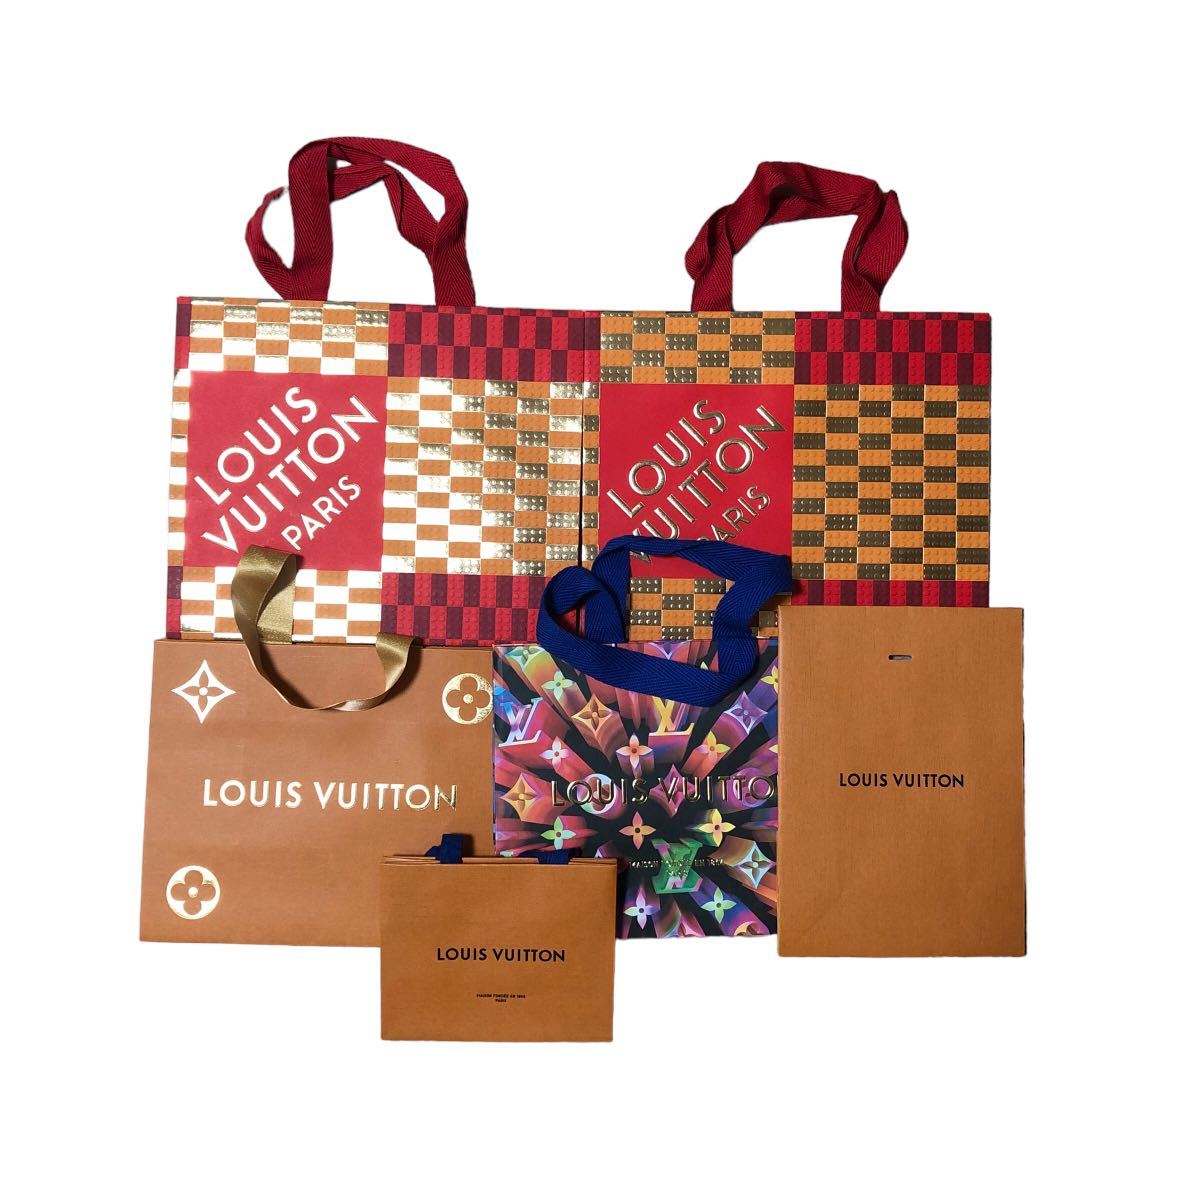 LOUIS VUITTON ルイヴィトン 紙袋 6枚 セット ショッパー ショッピング